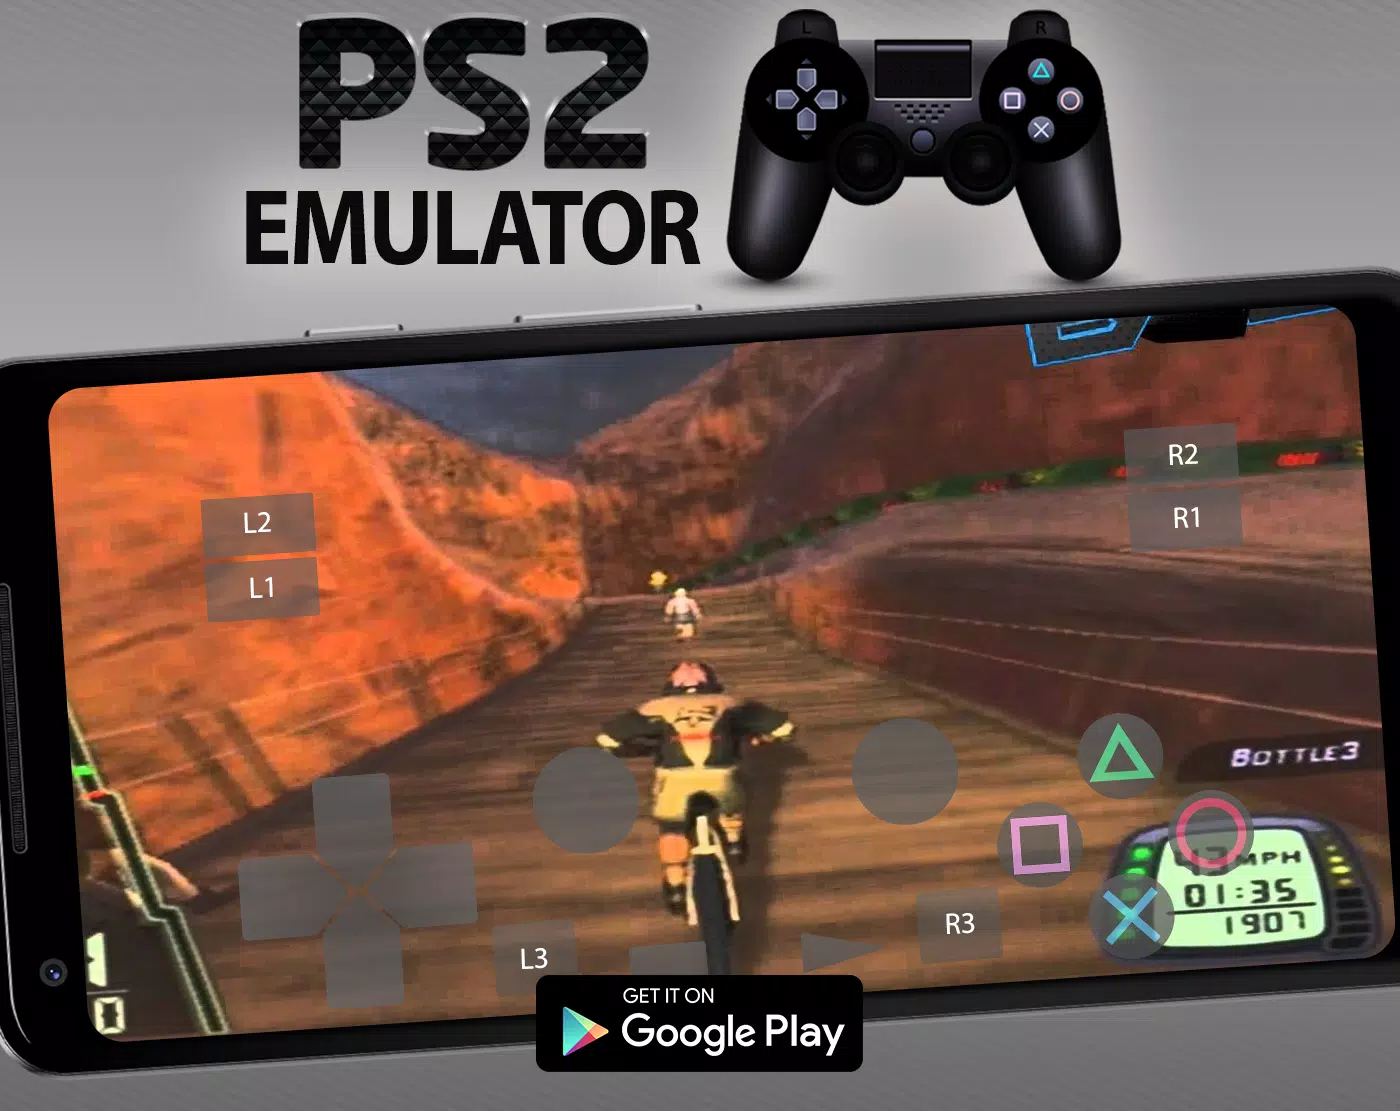 New PS2 Emulator - PRO PlayStation 2 Emulator for Android - APK Download